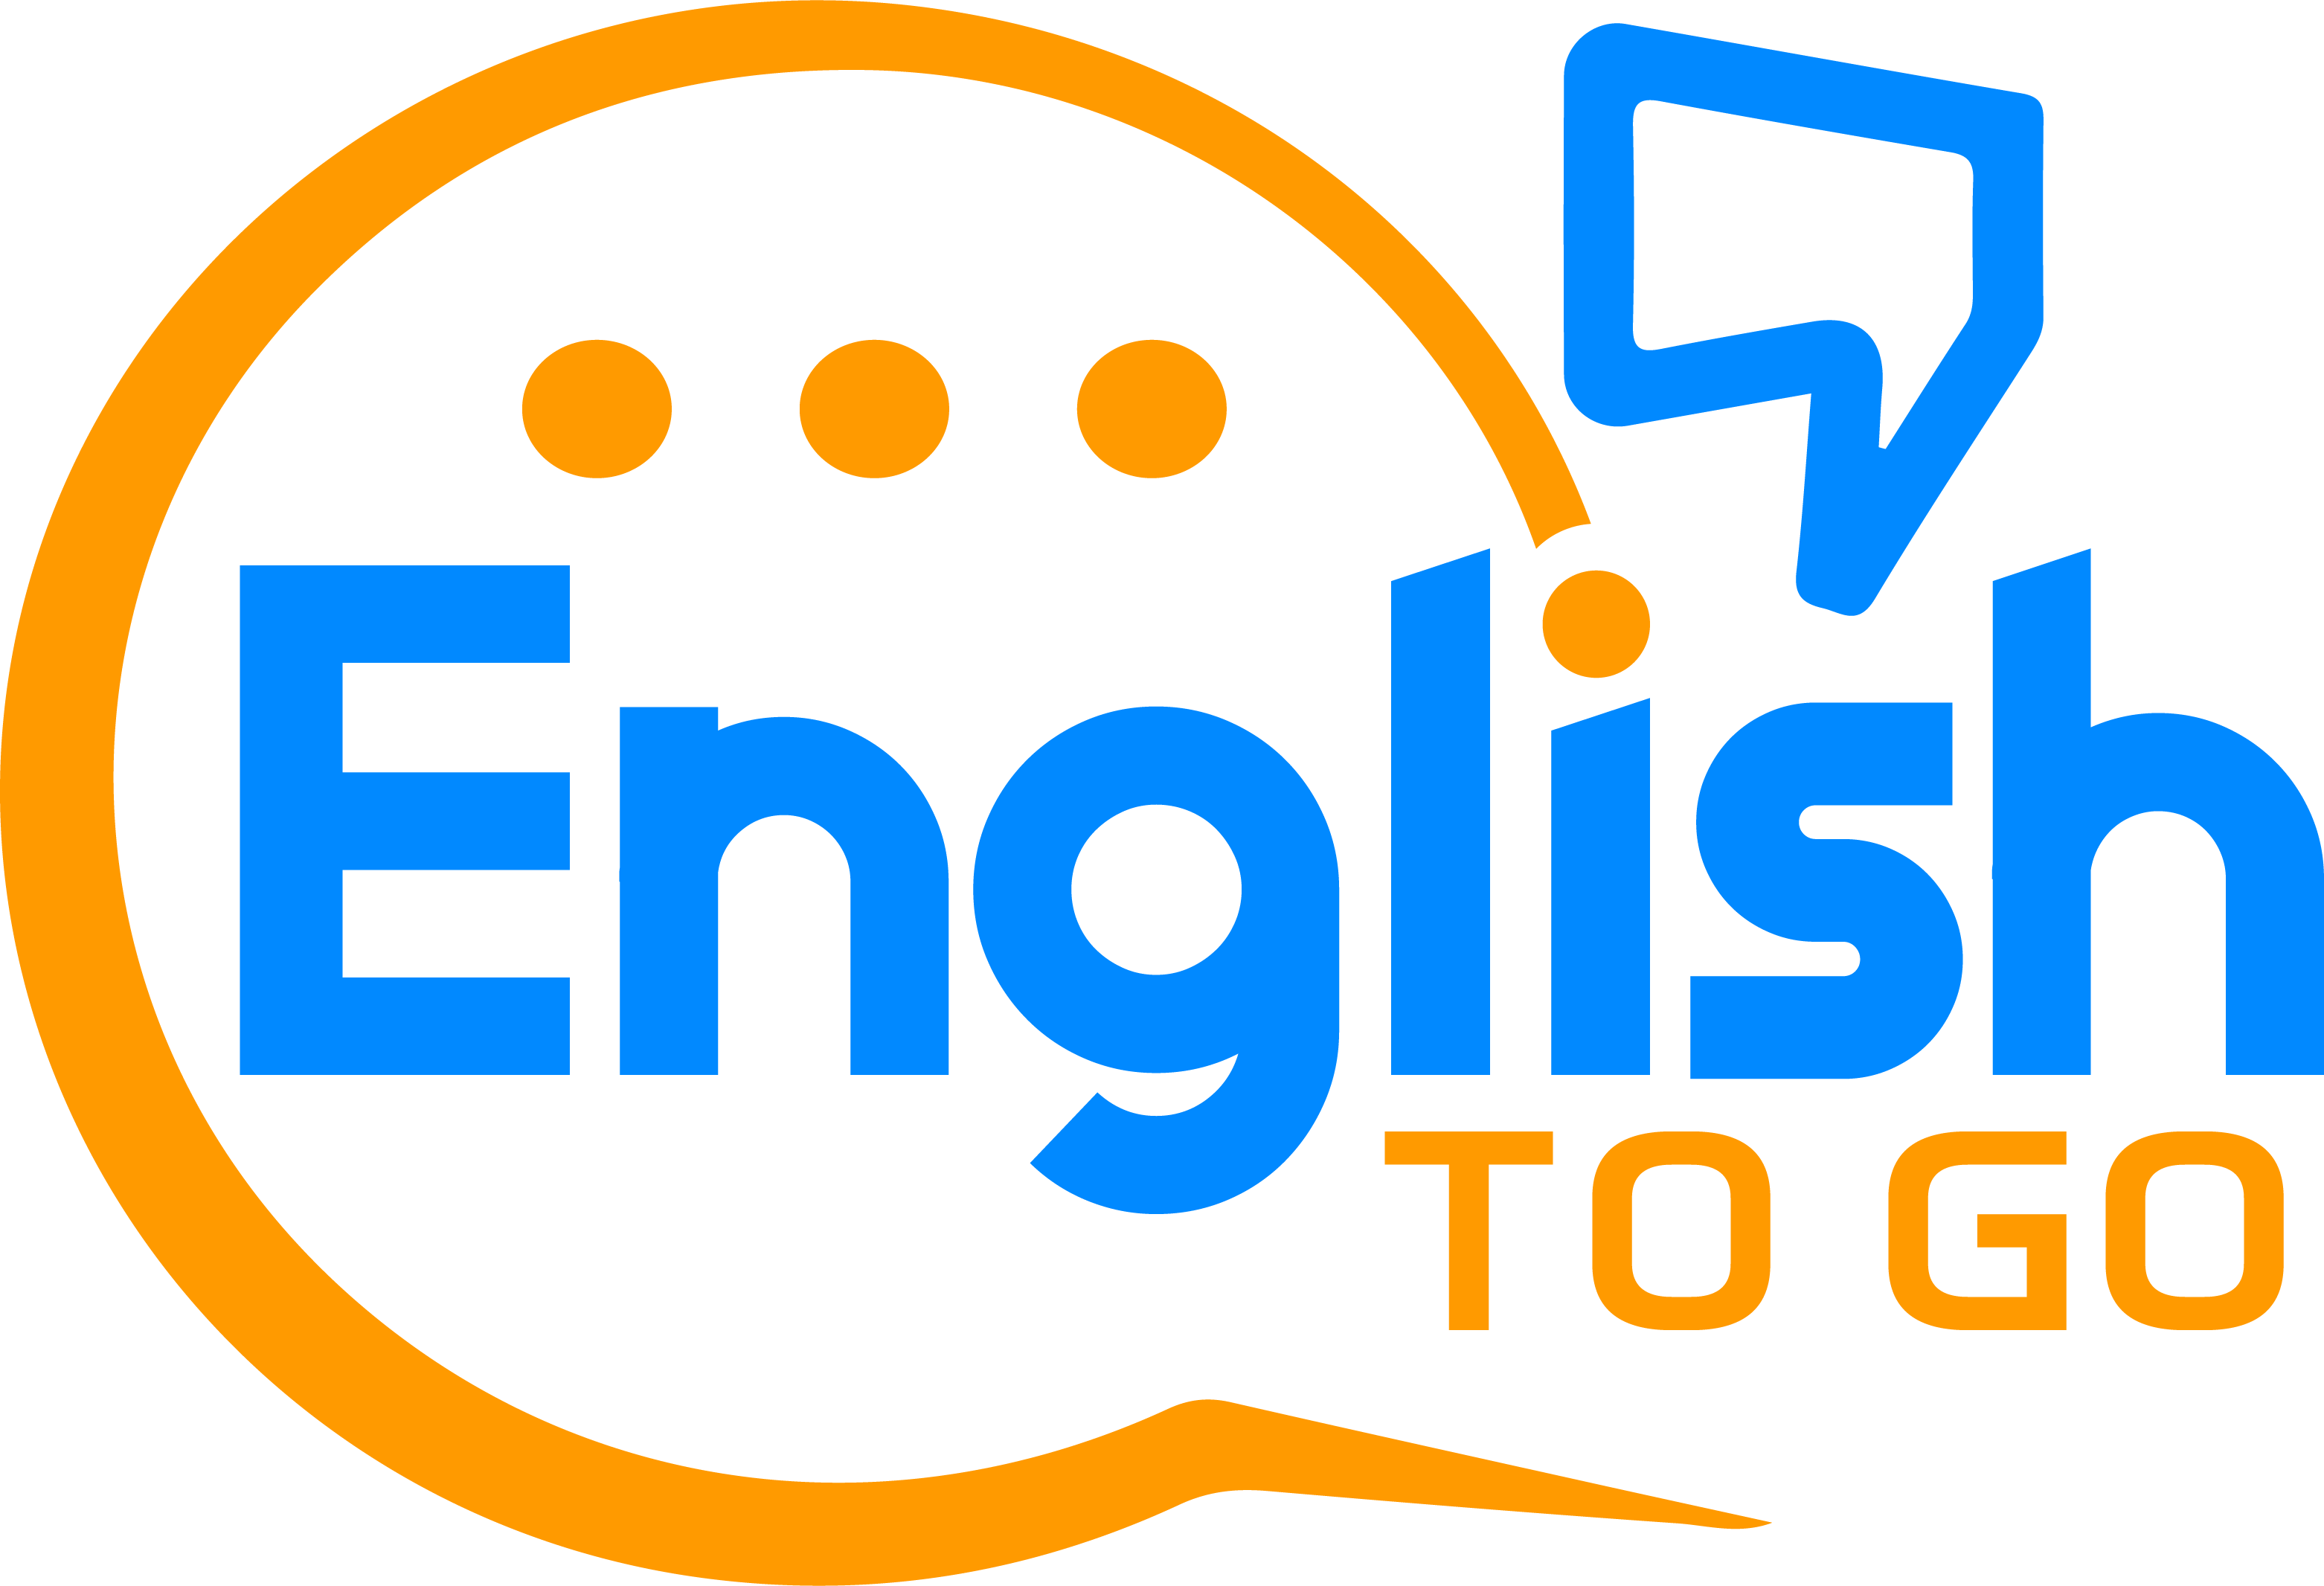 etg school logo